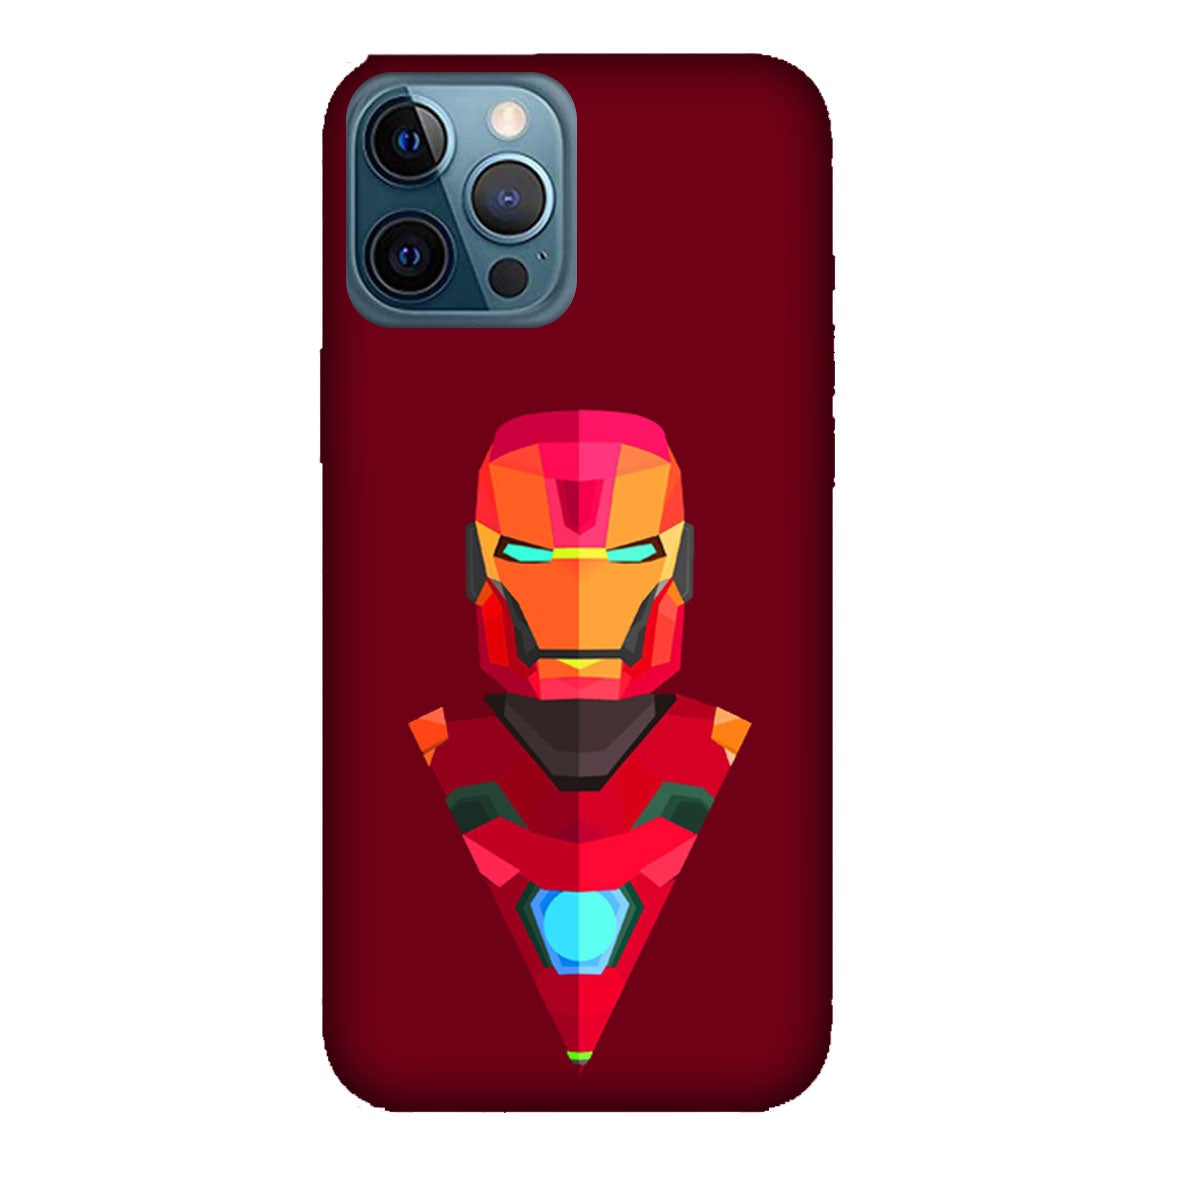 Iron Man - Avengers - Mobile Phone Cover - Hard Case